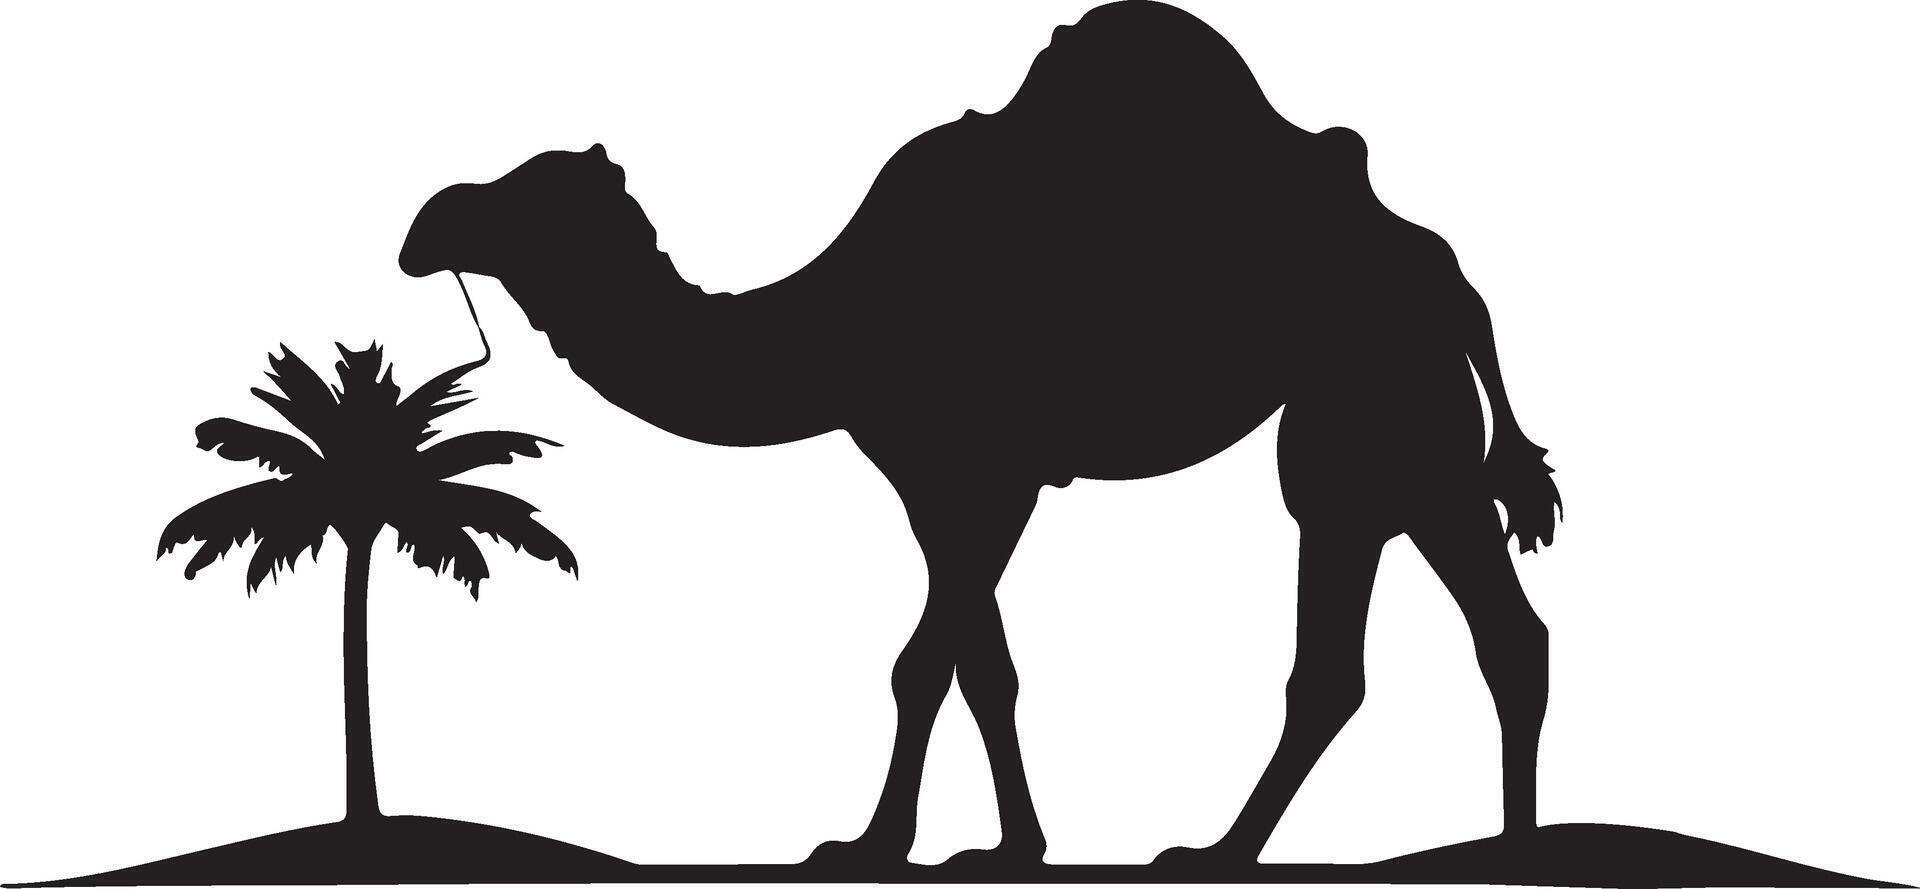 Flat design Camel silhouette,Camel graphic icon. Camel black sign isolated on white background. Camel symbol of desert. illustration vector